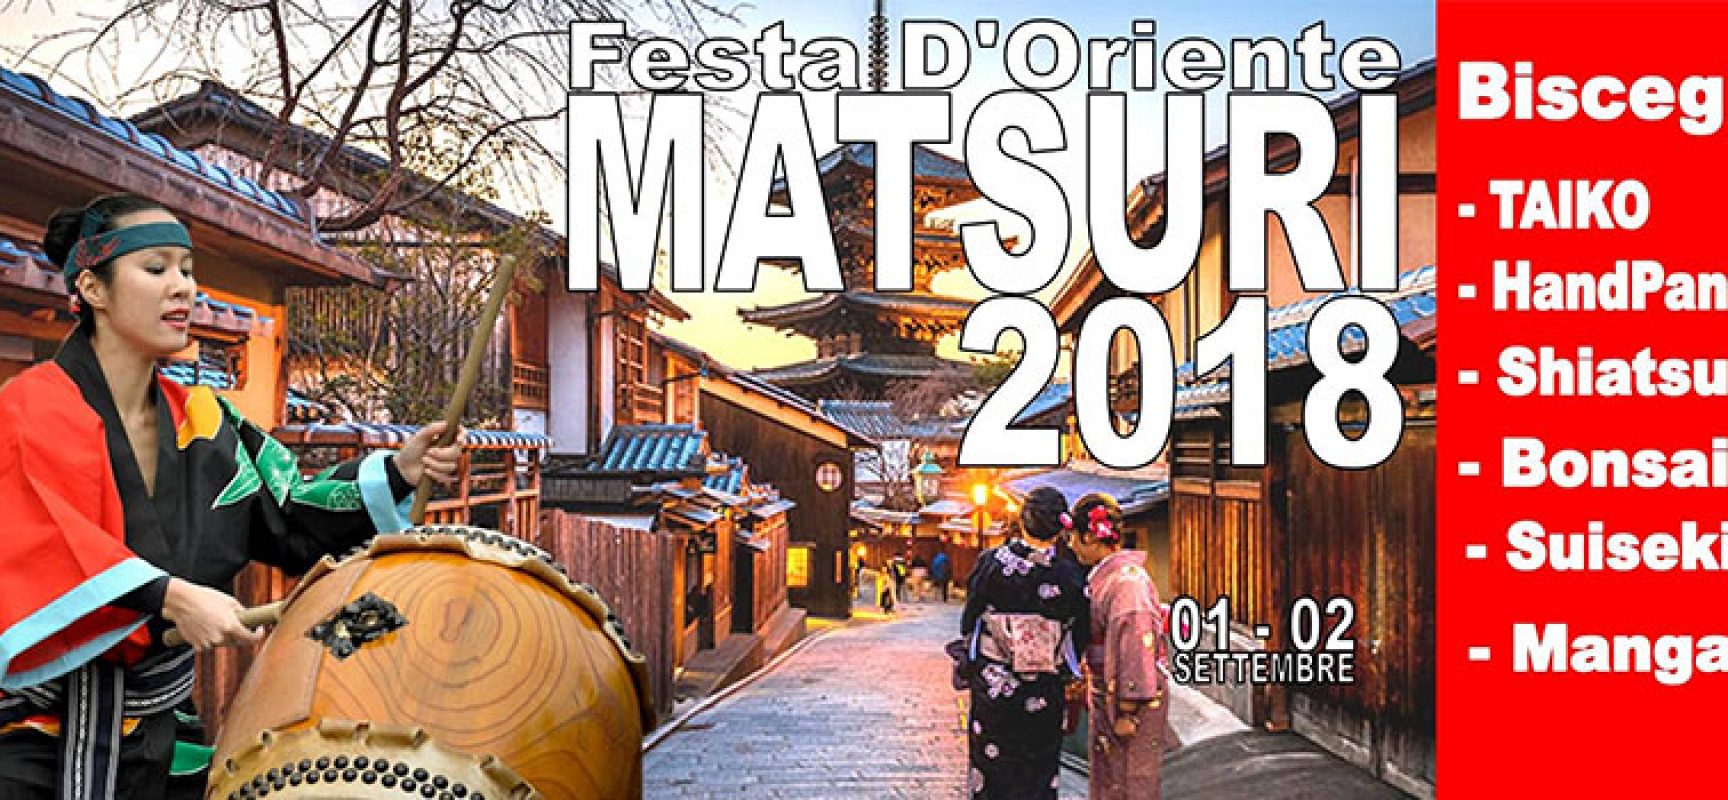 Matsuri Festival d’Oriente, la cultura nipponica approda in tre serate a Bisceglie